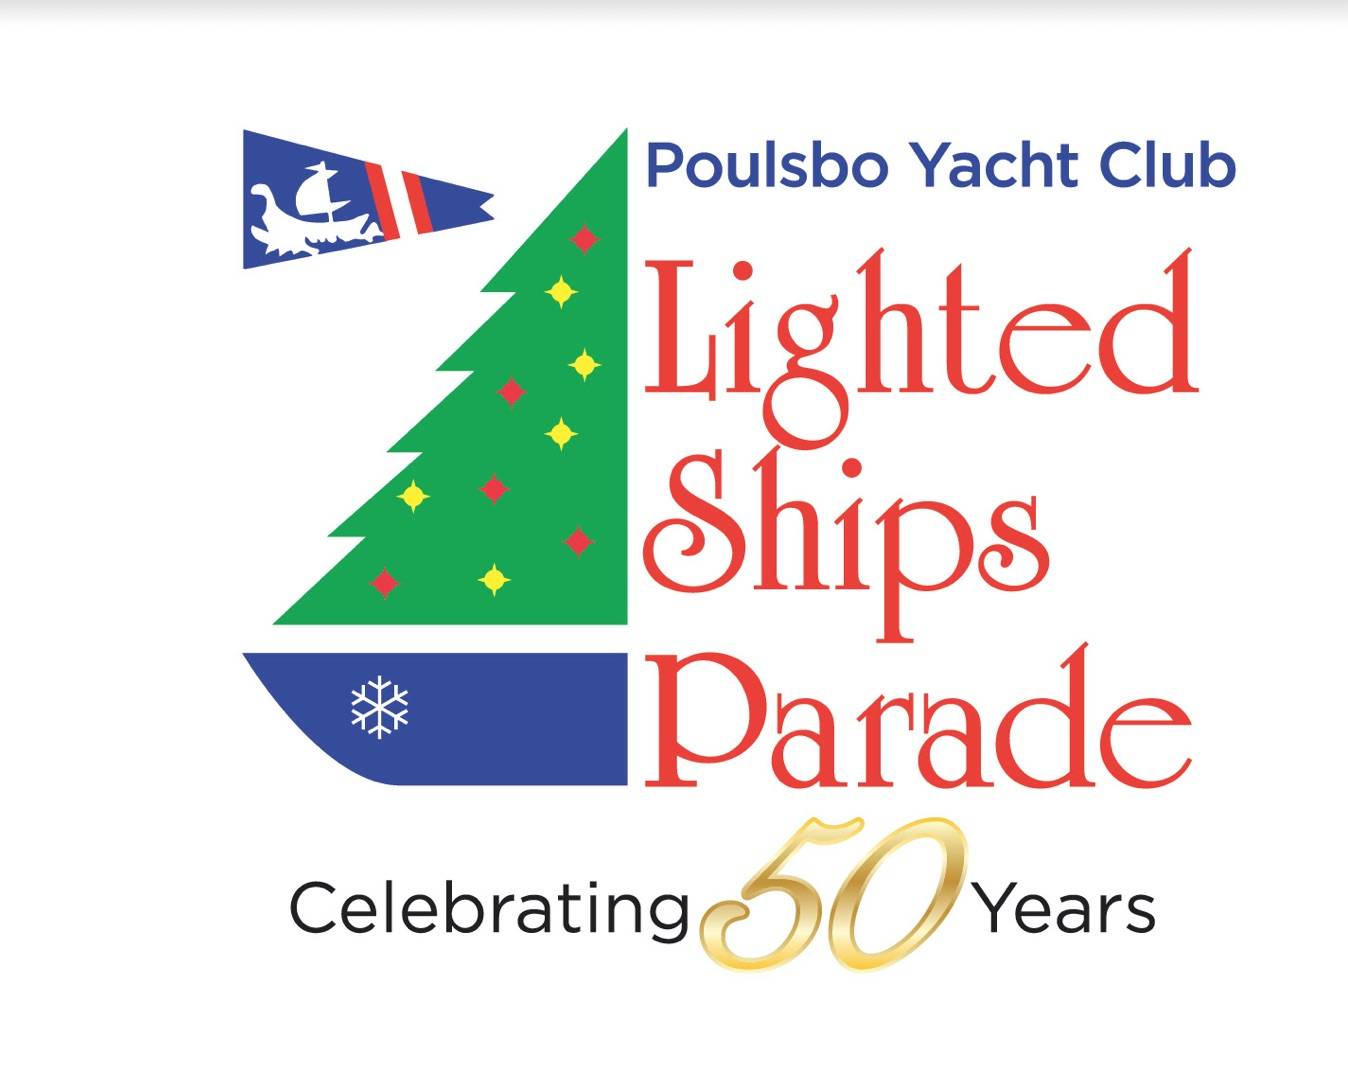 Poulsbo Lighted Ships Parade celebrates 50 Years